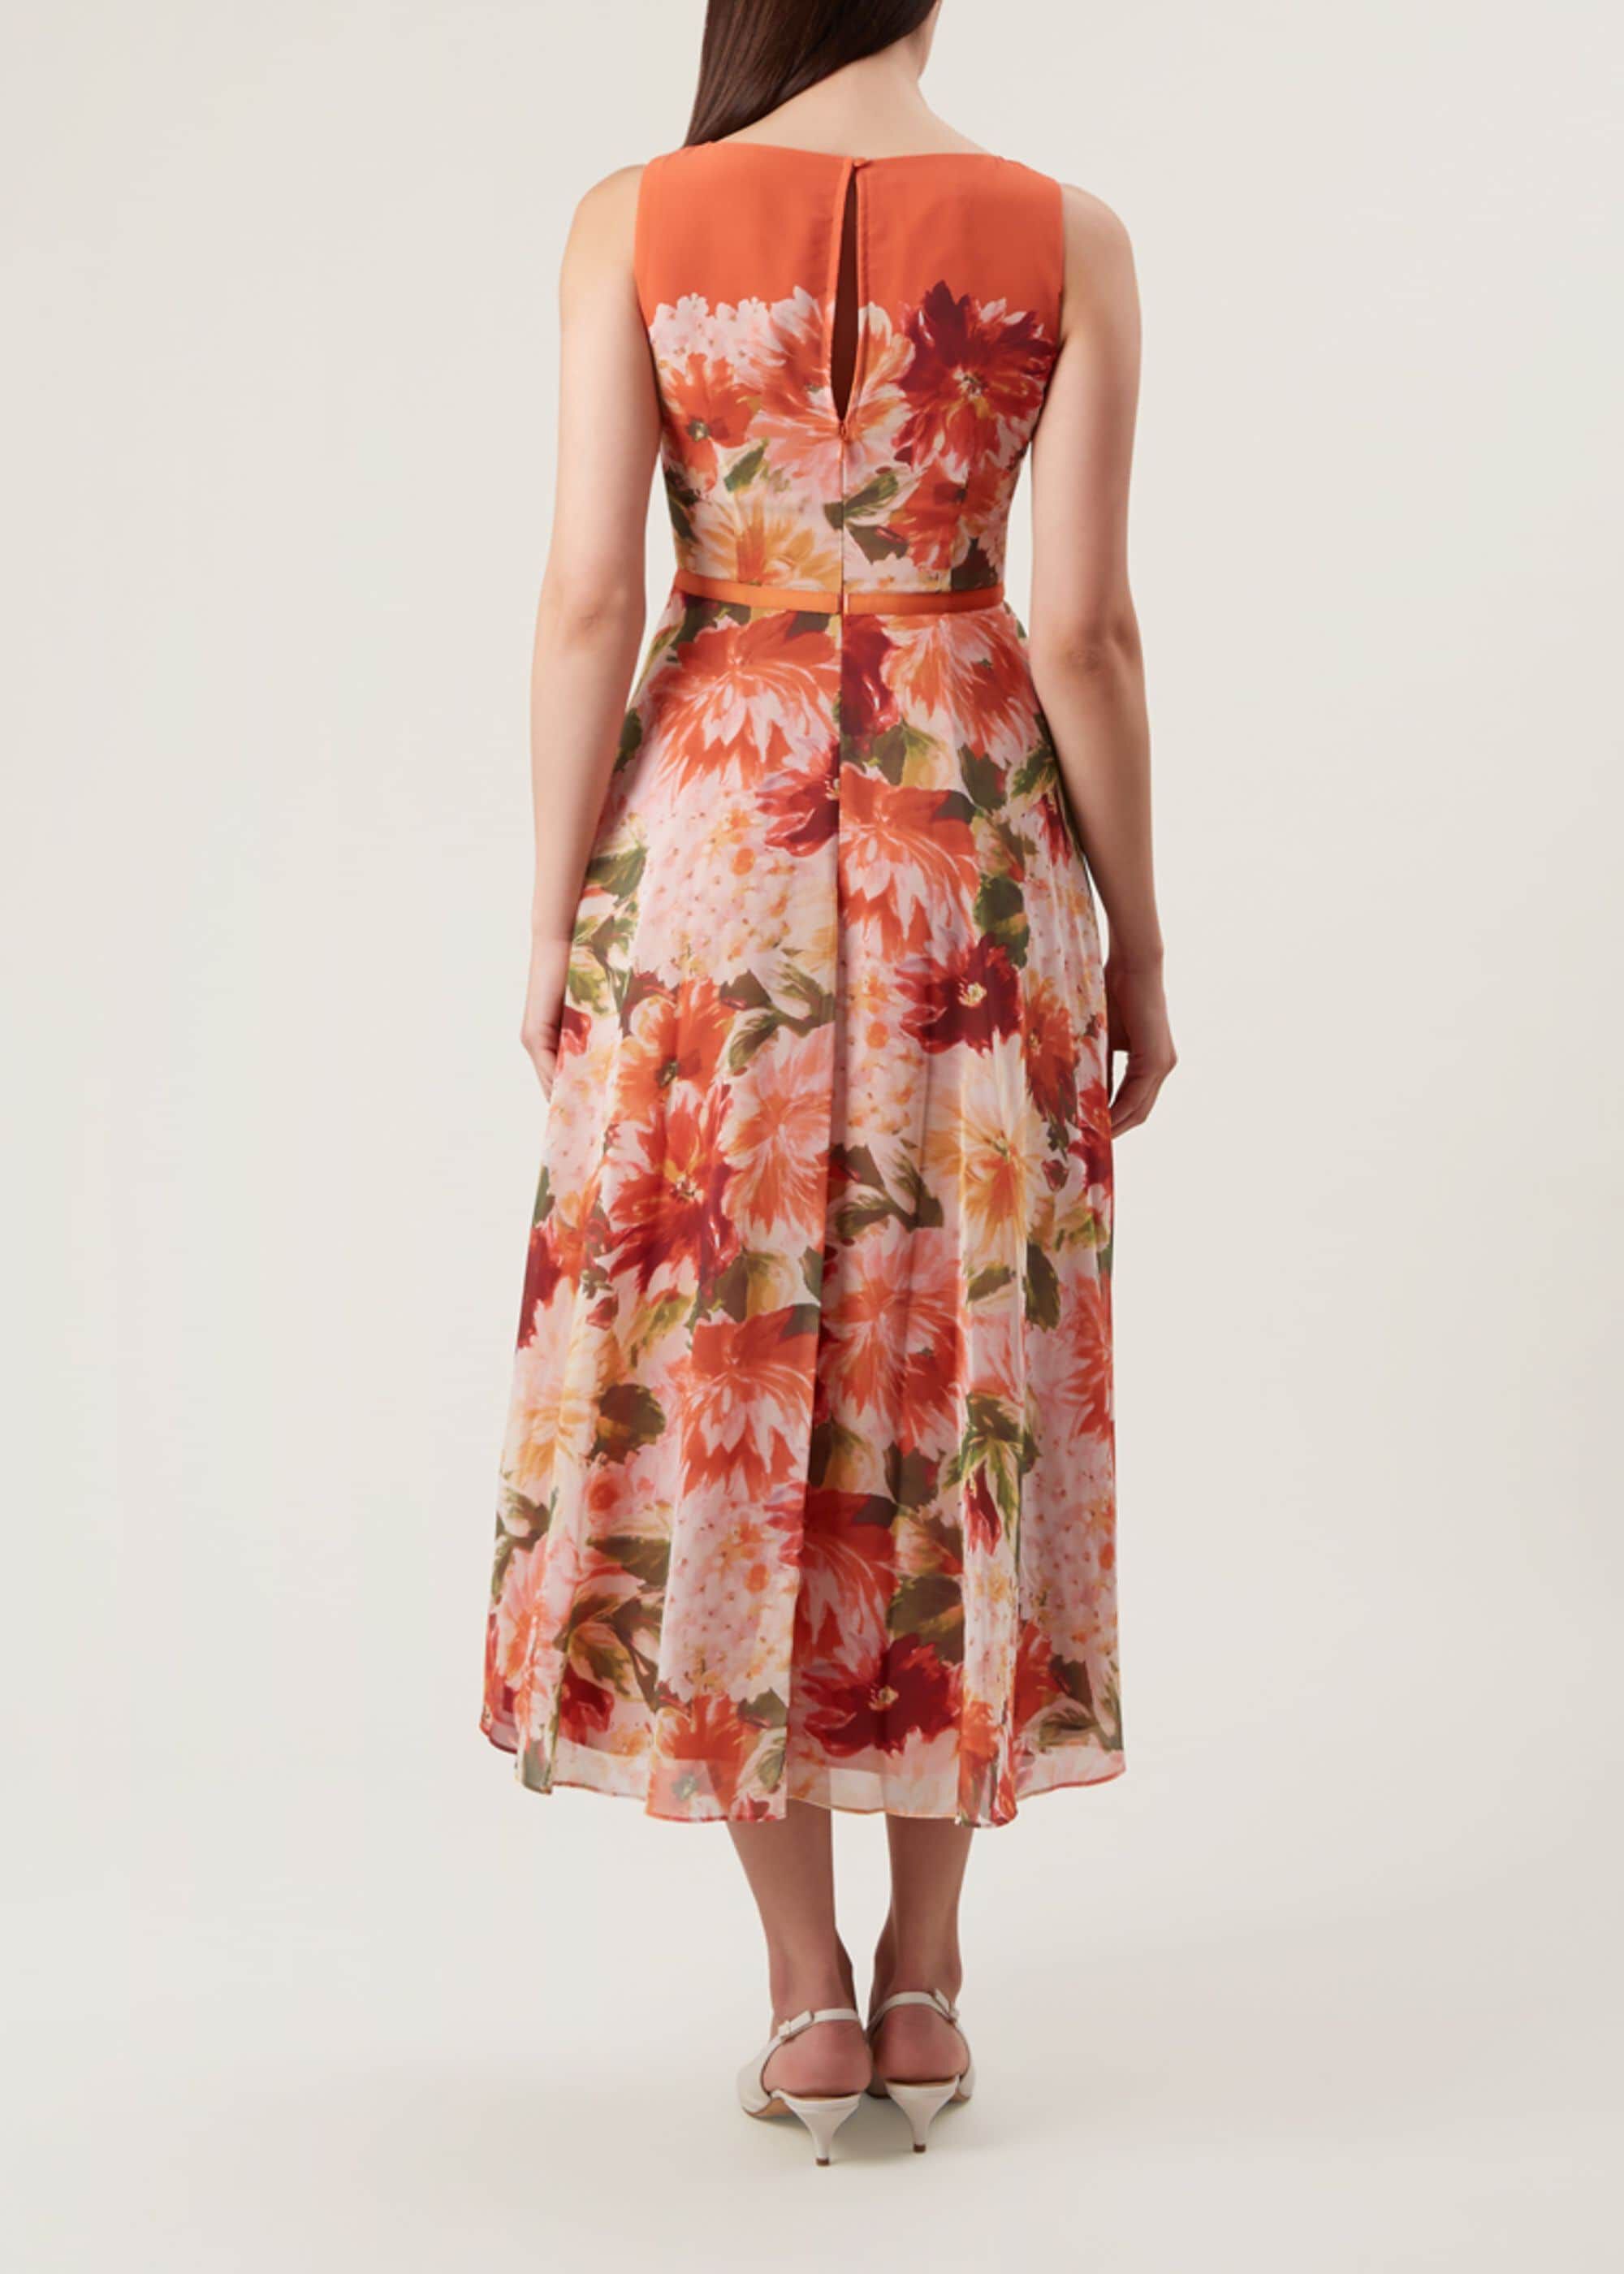 Hobbs Floral Carly Dress Midi Fit & Flare Dress Sleeveless | eBay